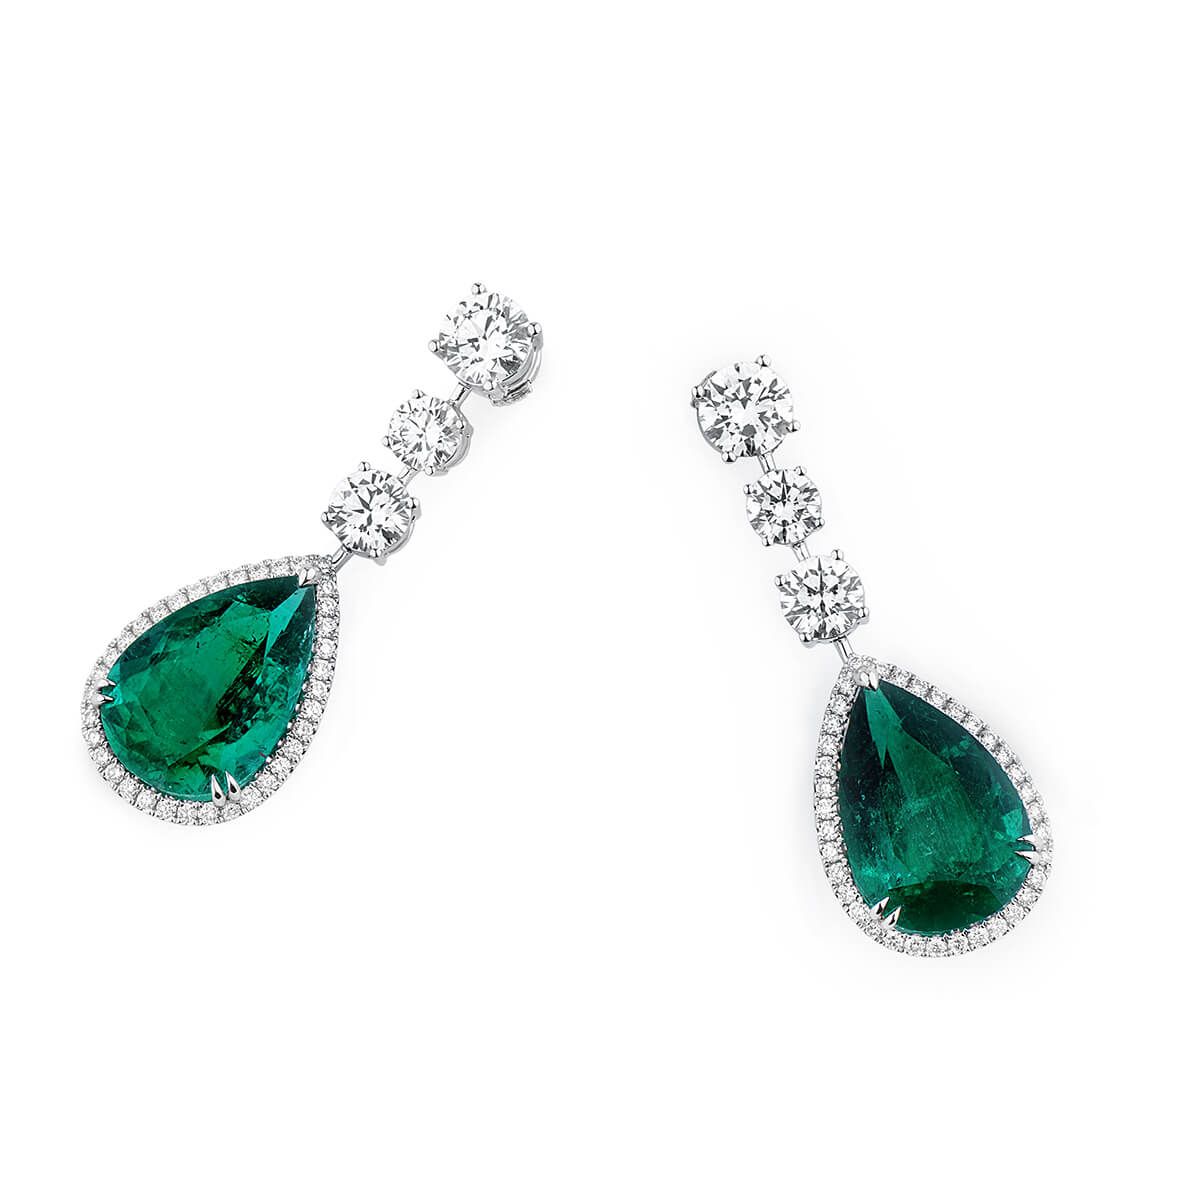 Natural Vivid Green Emerald Earrings, 20.75 Ct. (25.93 Ct. TW), GRS Certified, JCEG05430873, Unheated